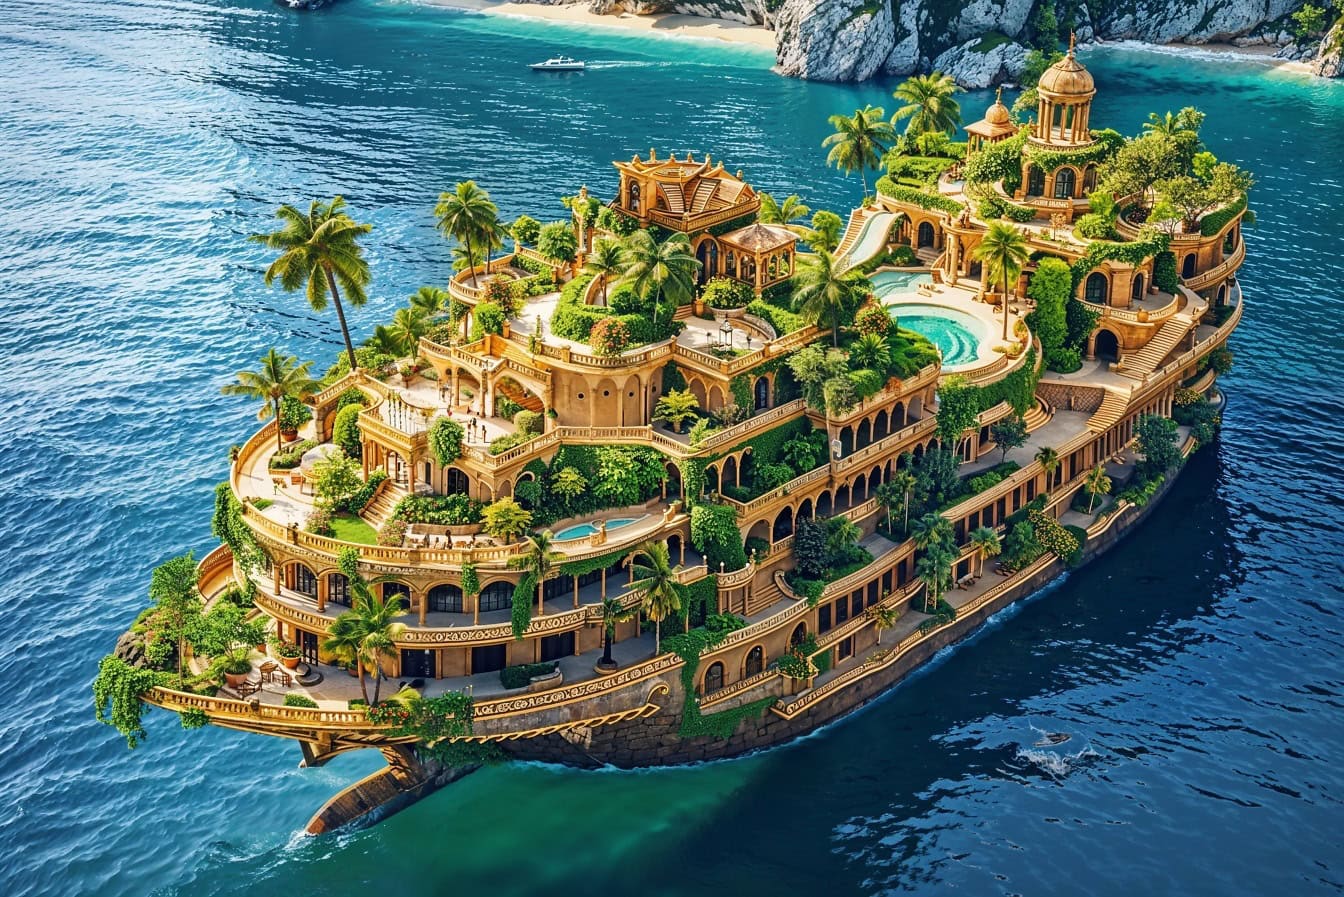 En luftfoto på det unike luksuriøse cruiseskipet på syv etasjer med tropiske planter og svømmebasseng